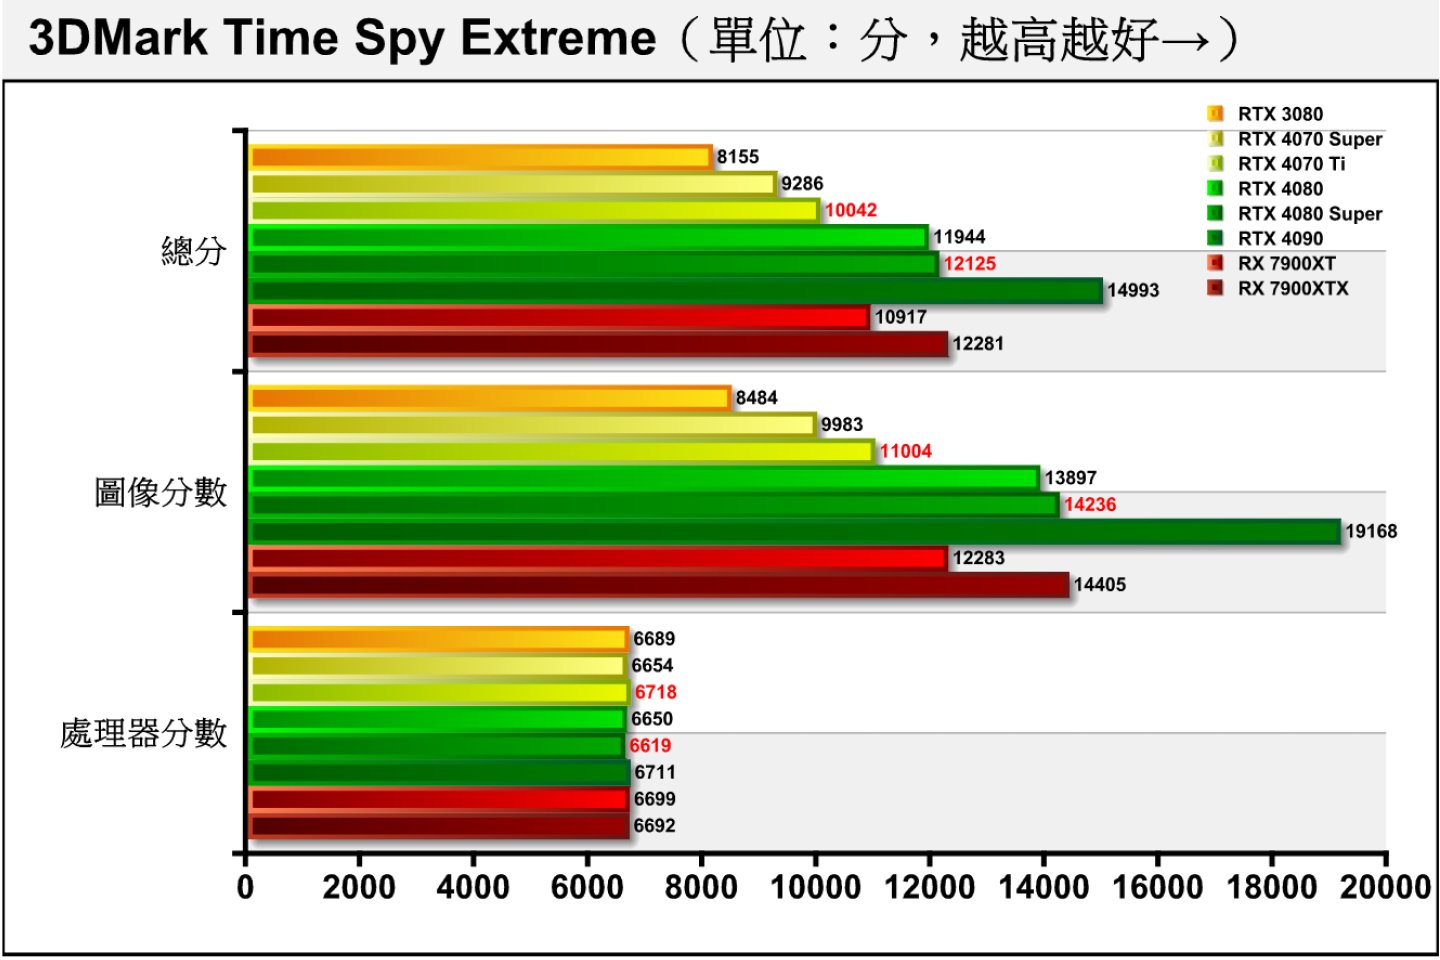 Time Spy Extreme將解析度提升至4K，RTX 4080 Super圖像分數的幅度領先幅度達2.44%。